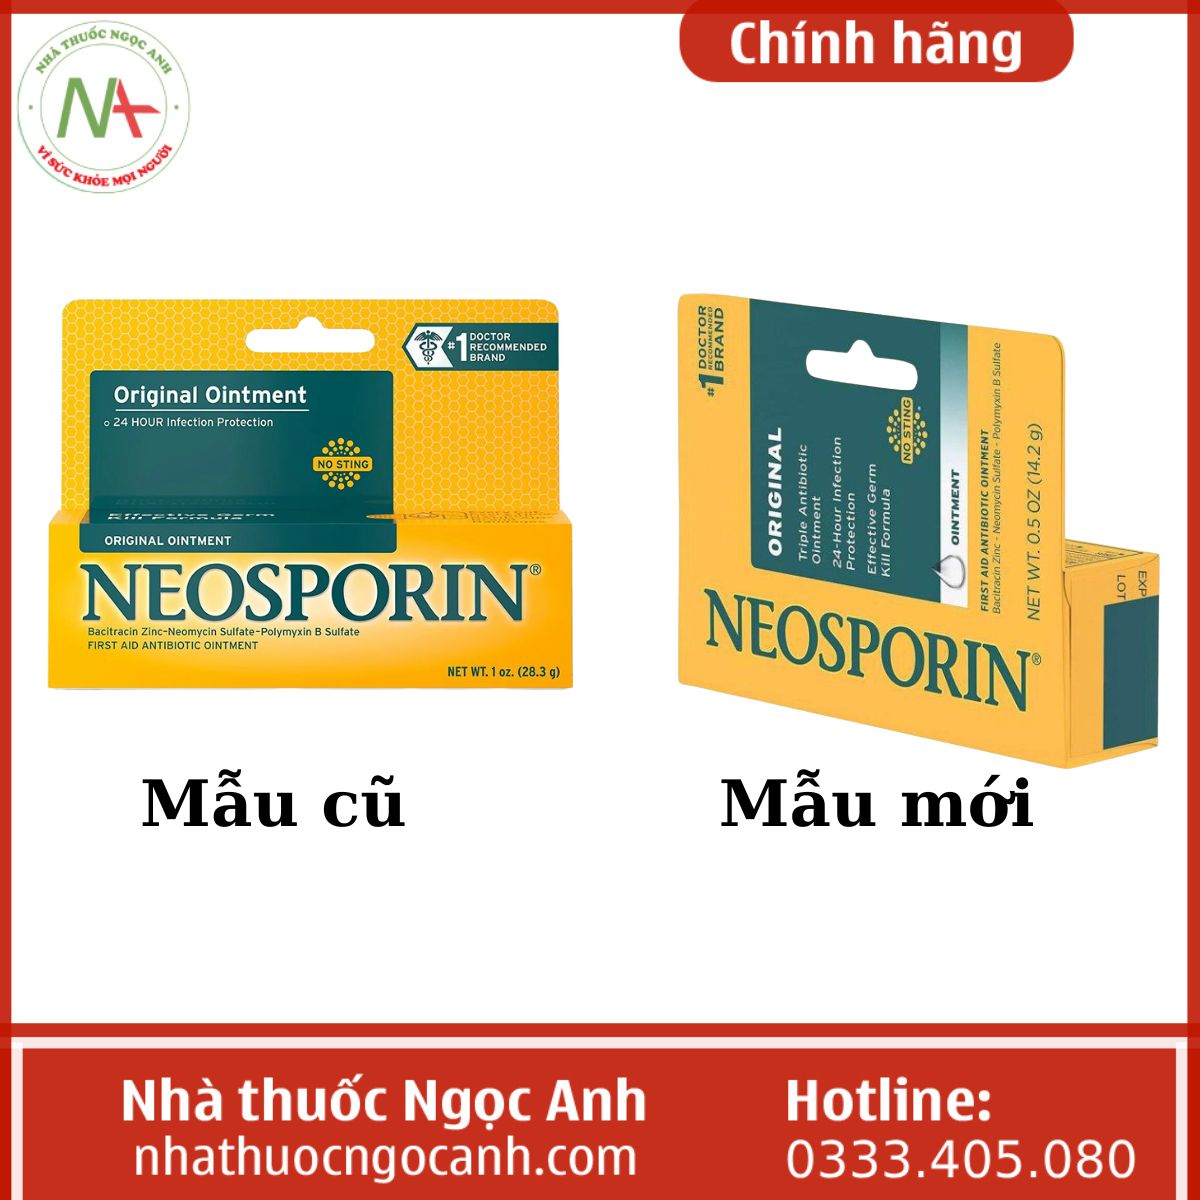 Neosporin Original Ointment 28.3g